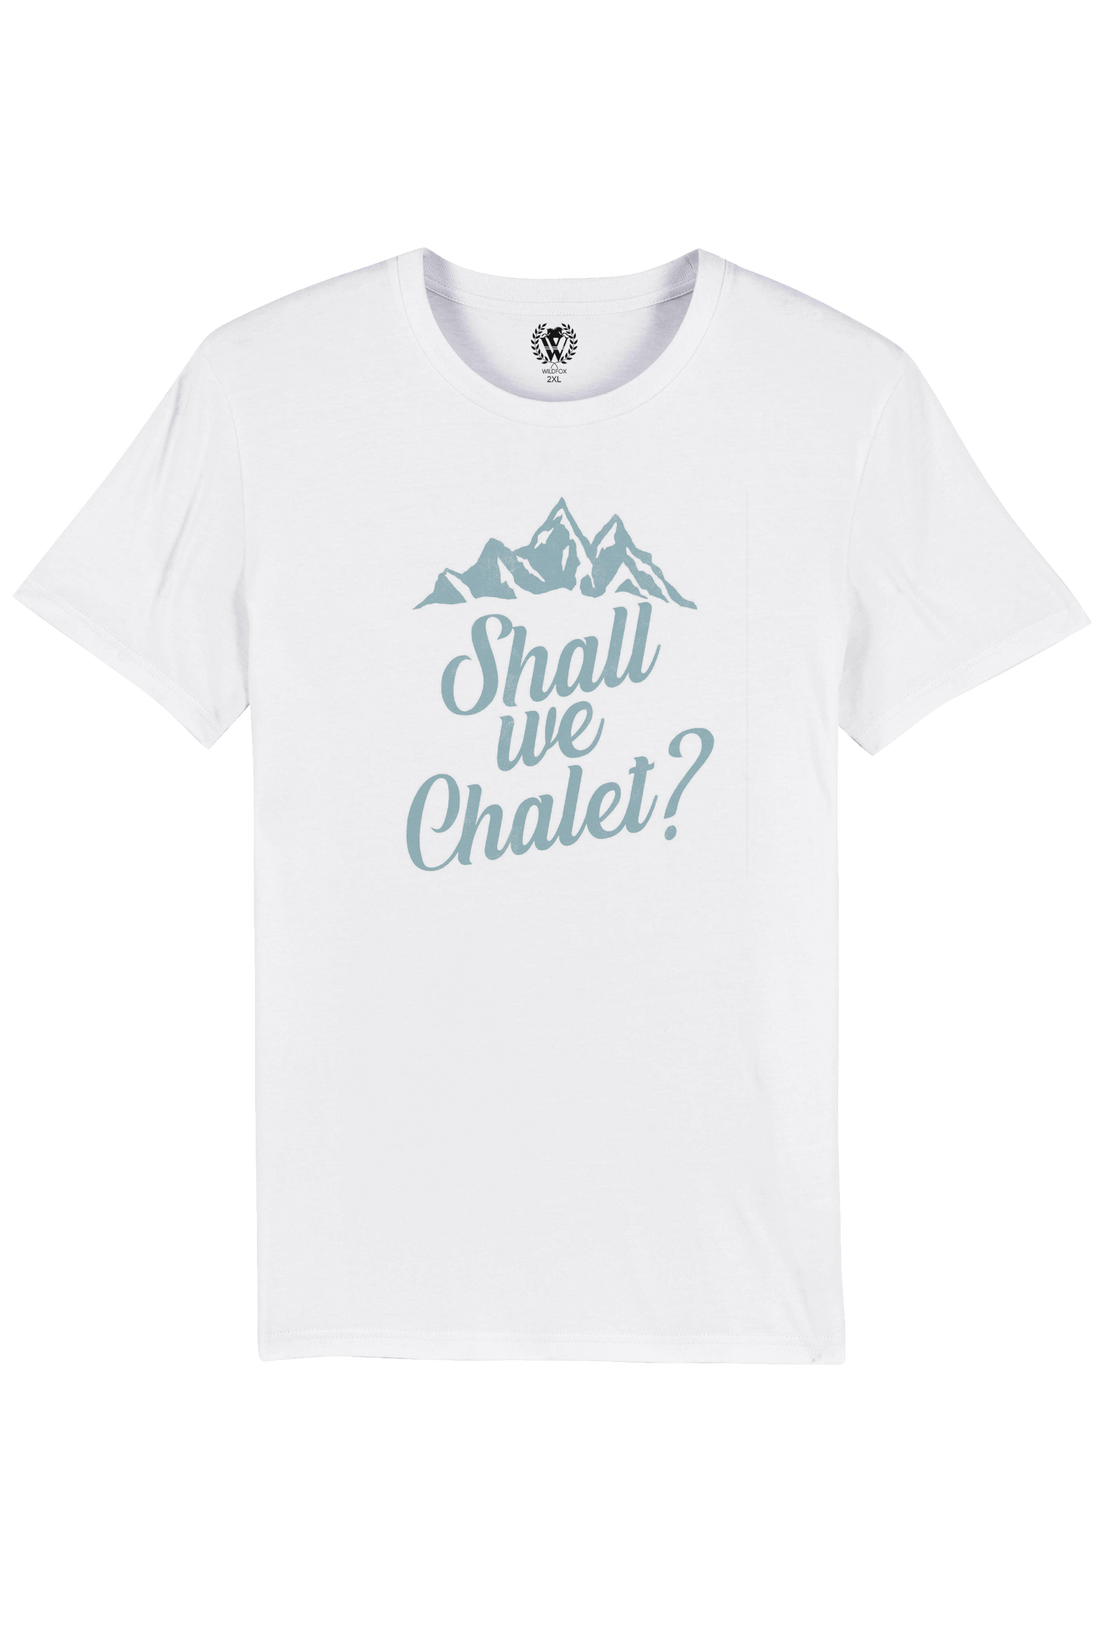 chanel logo t shirt large